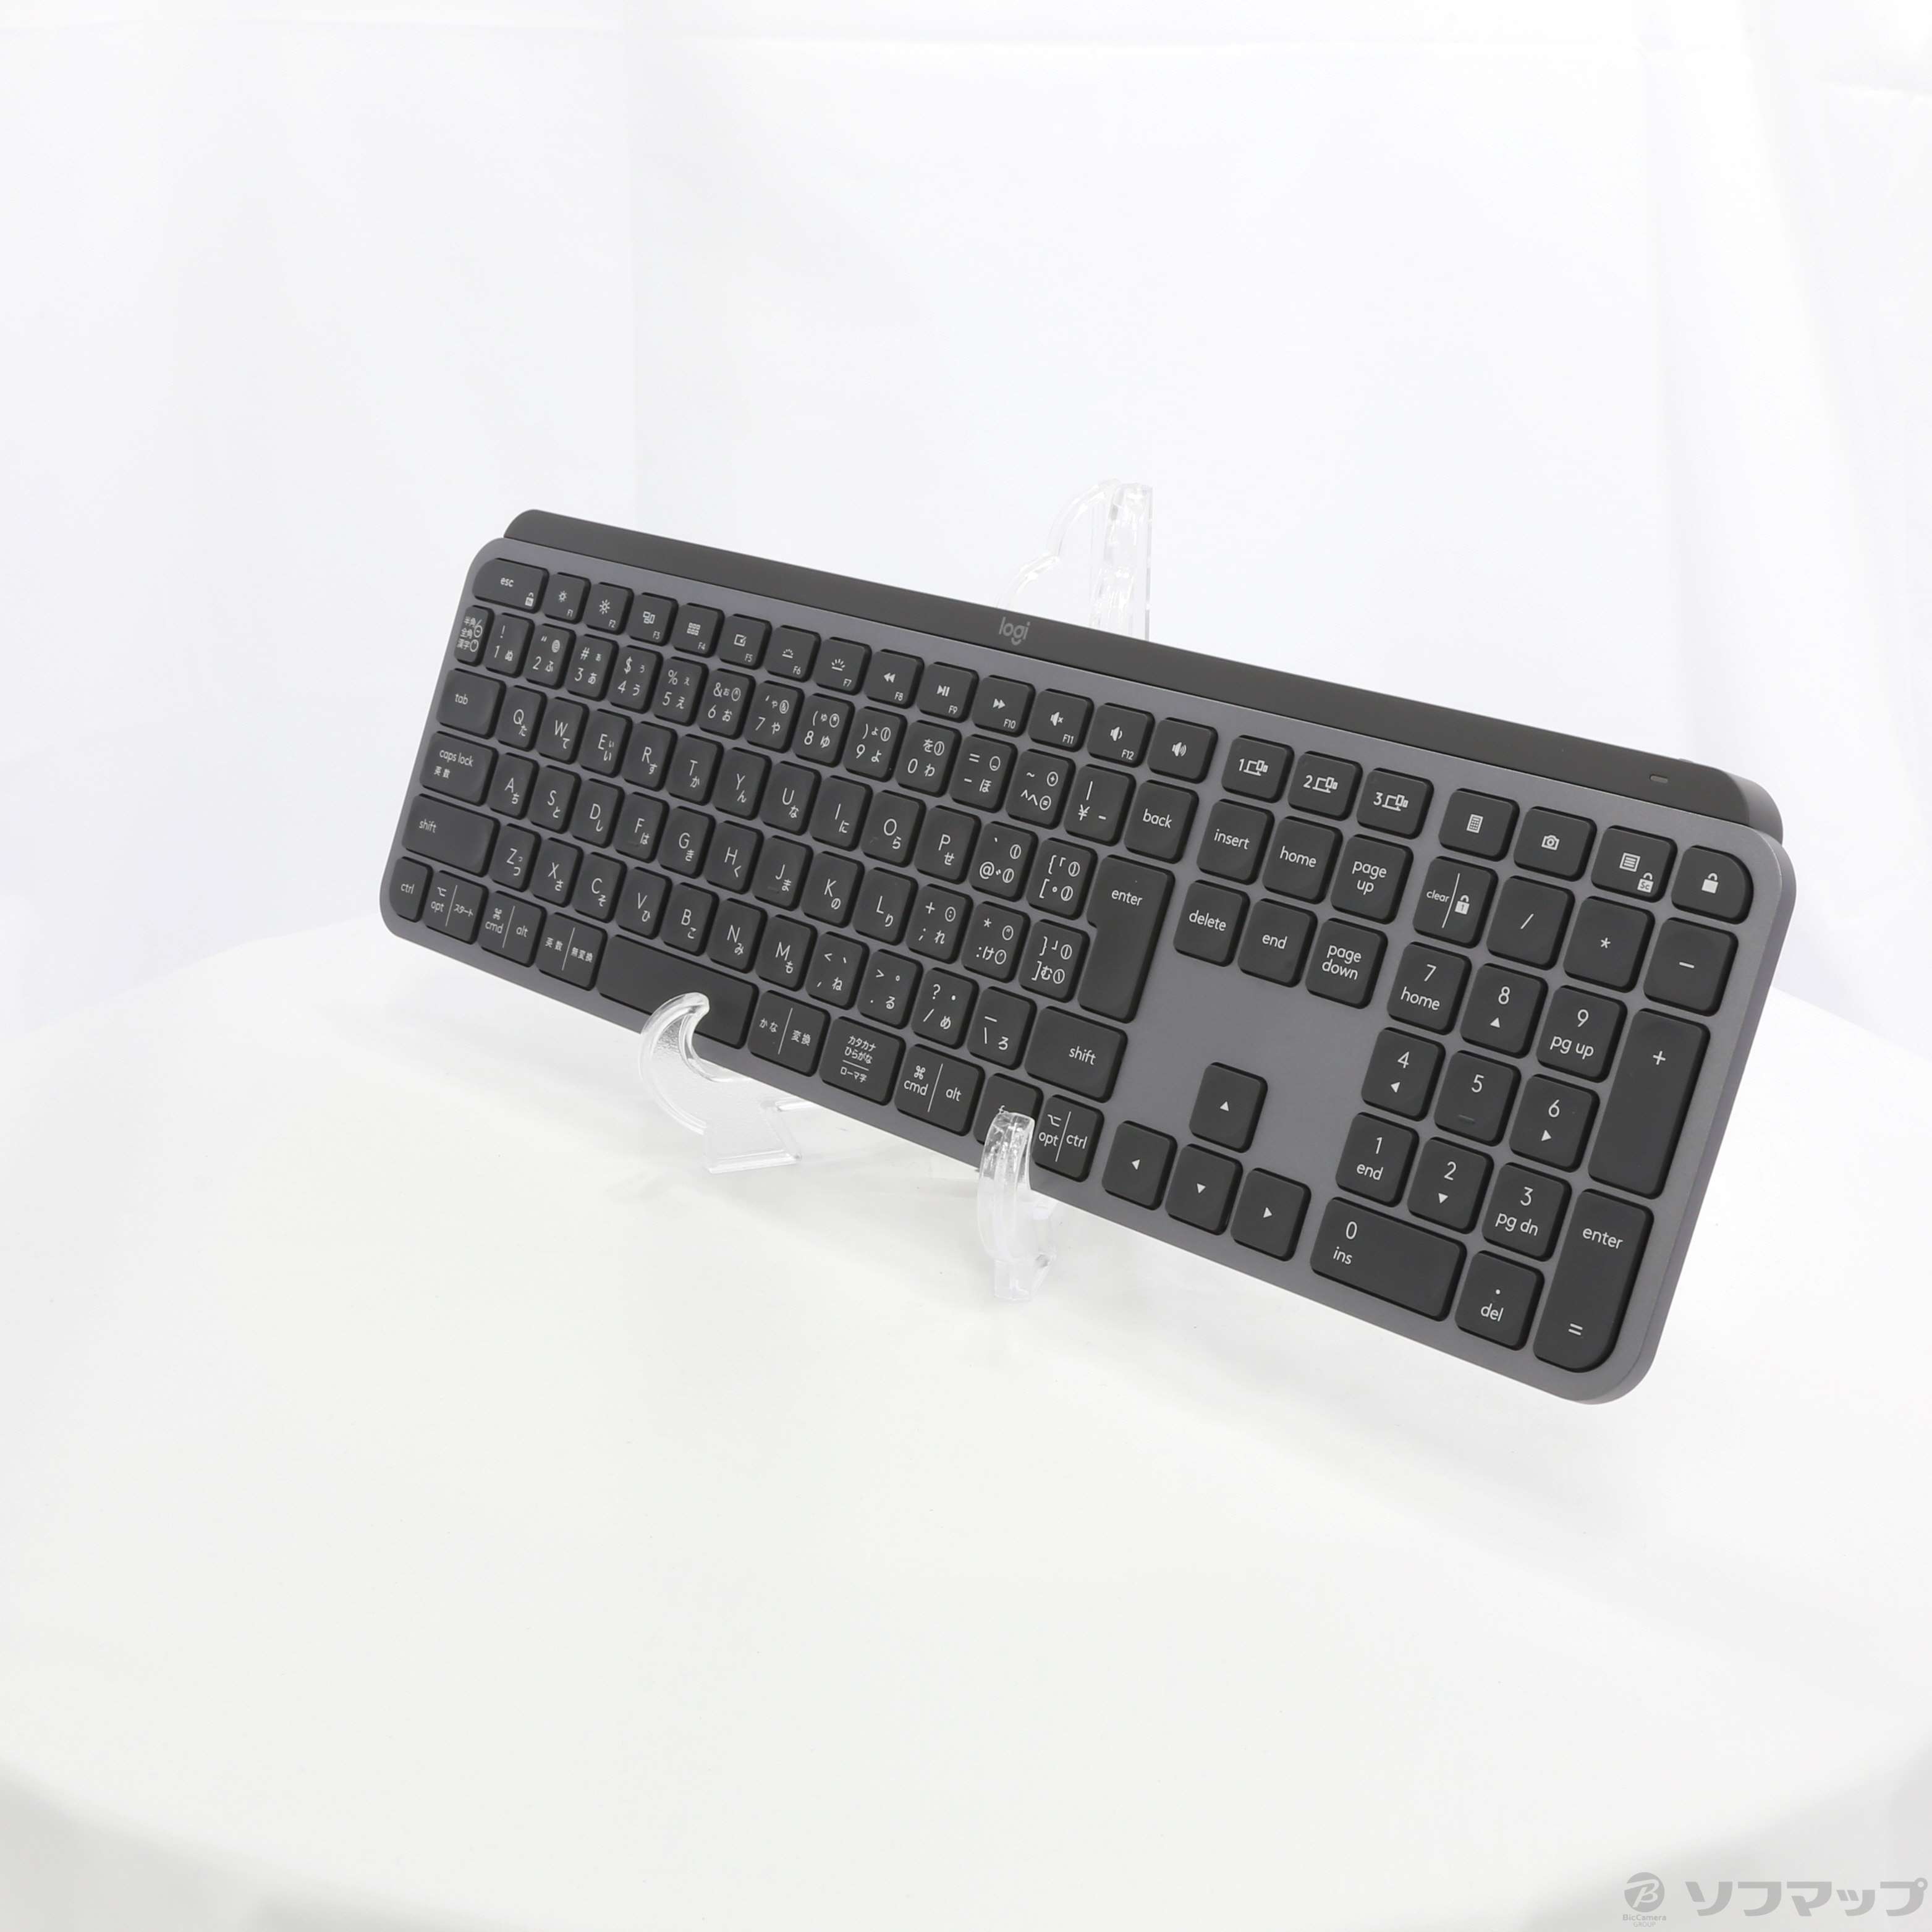 中古】MX KEYS Advanced Wireless Illuminated Keyboard KX800 ...